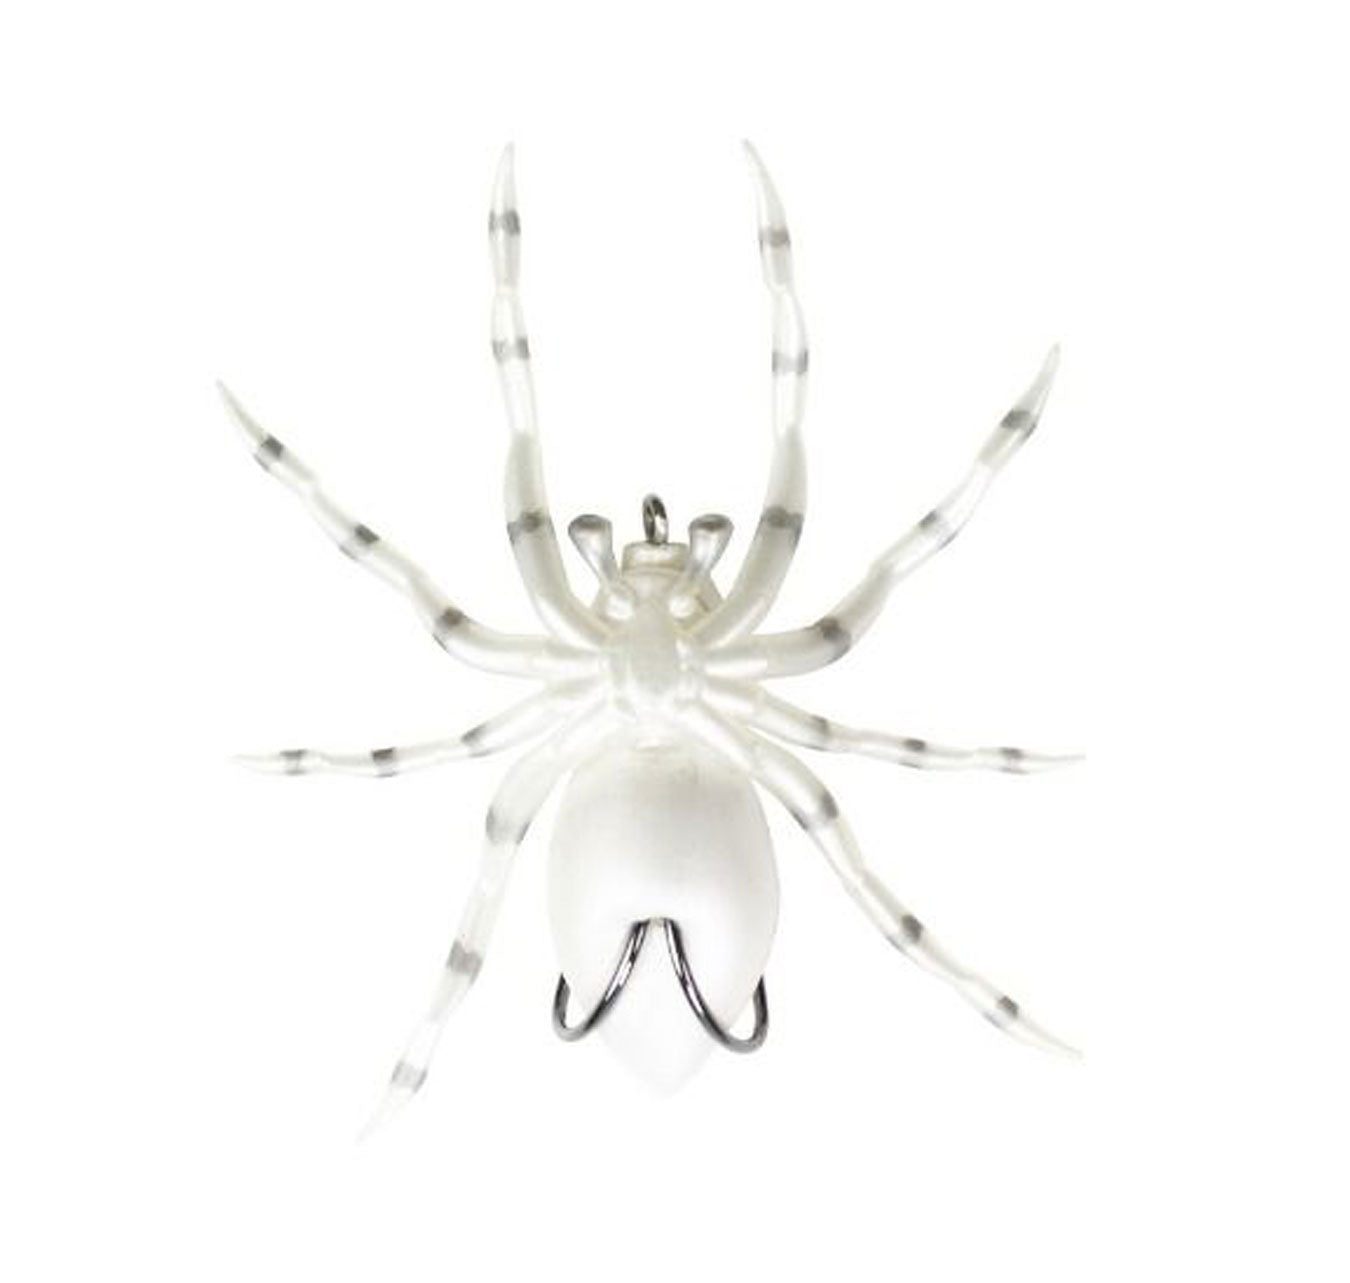 Spider Squid Jig Hooks - Click Here